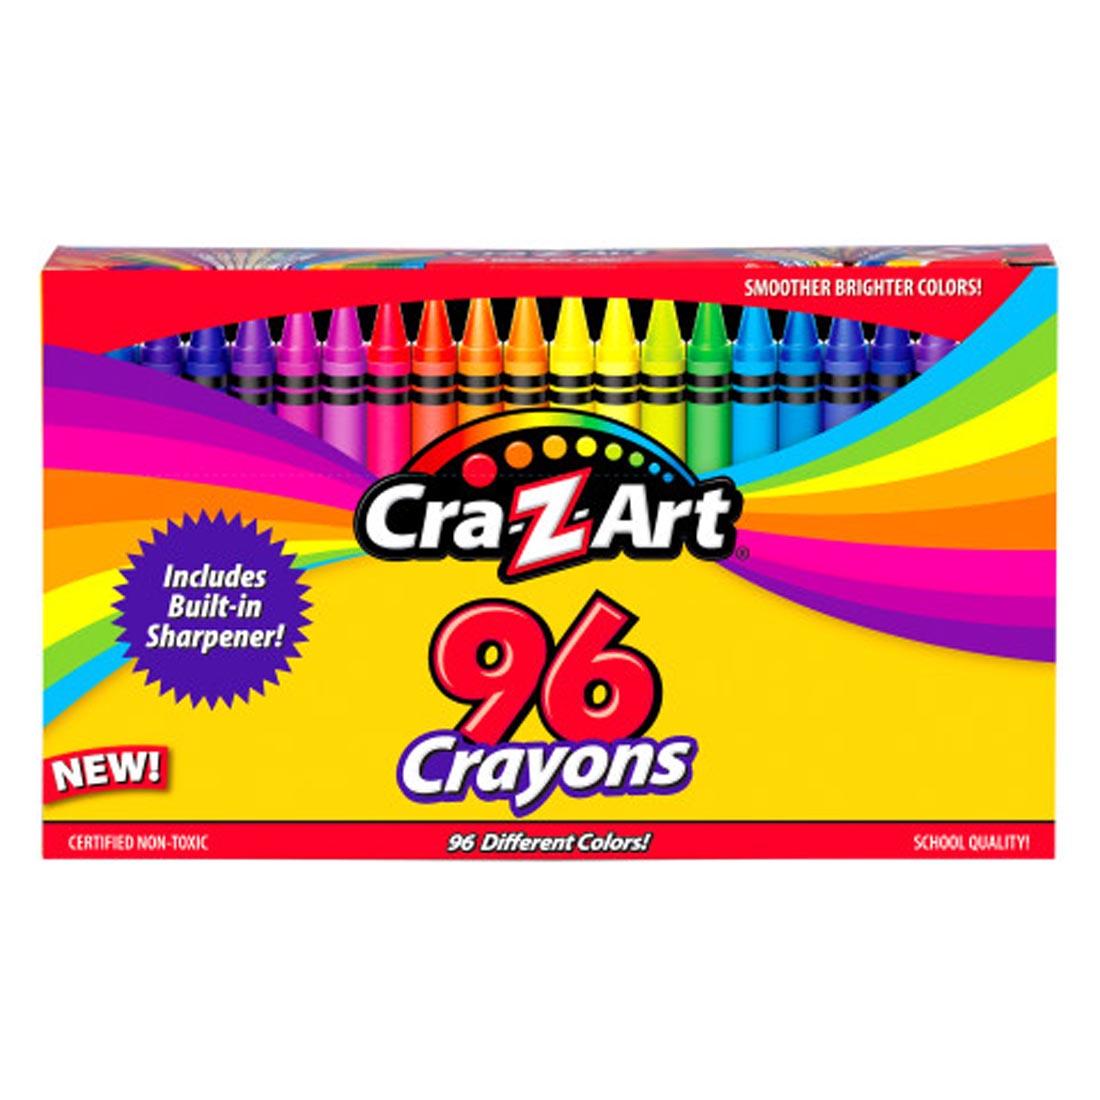 Cra-Z-Art Crayons 96-Color Set